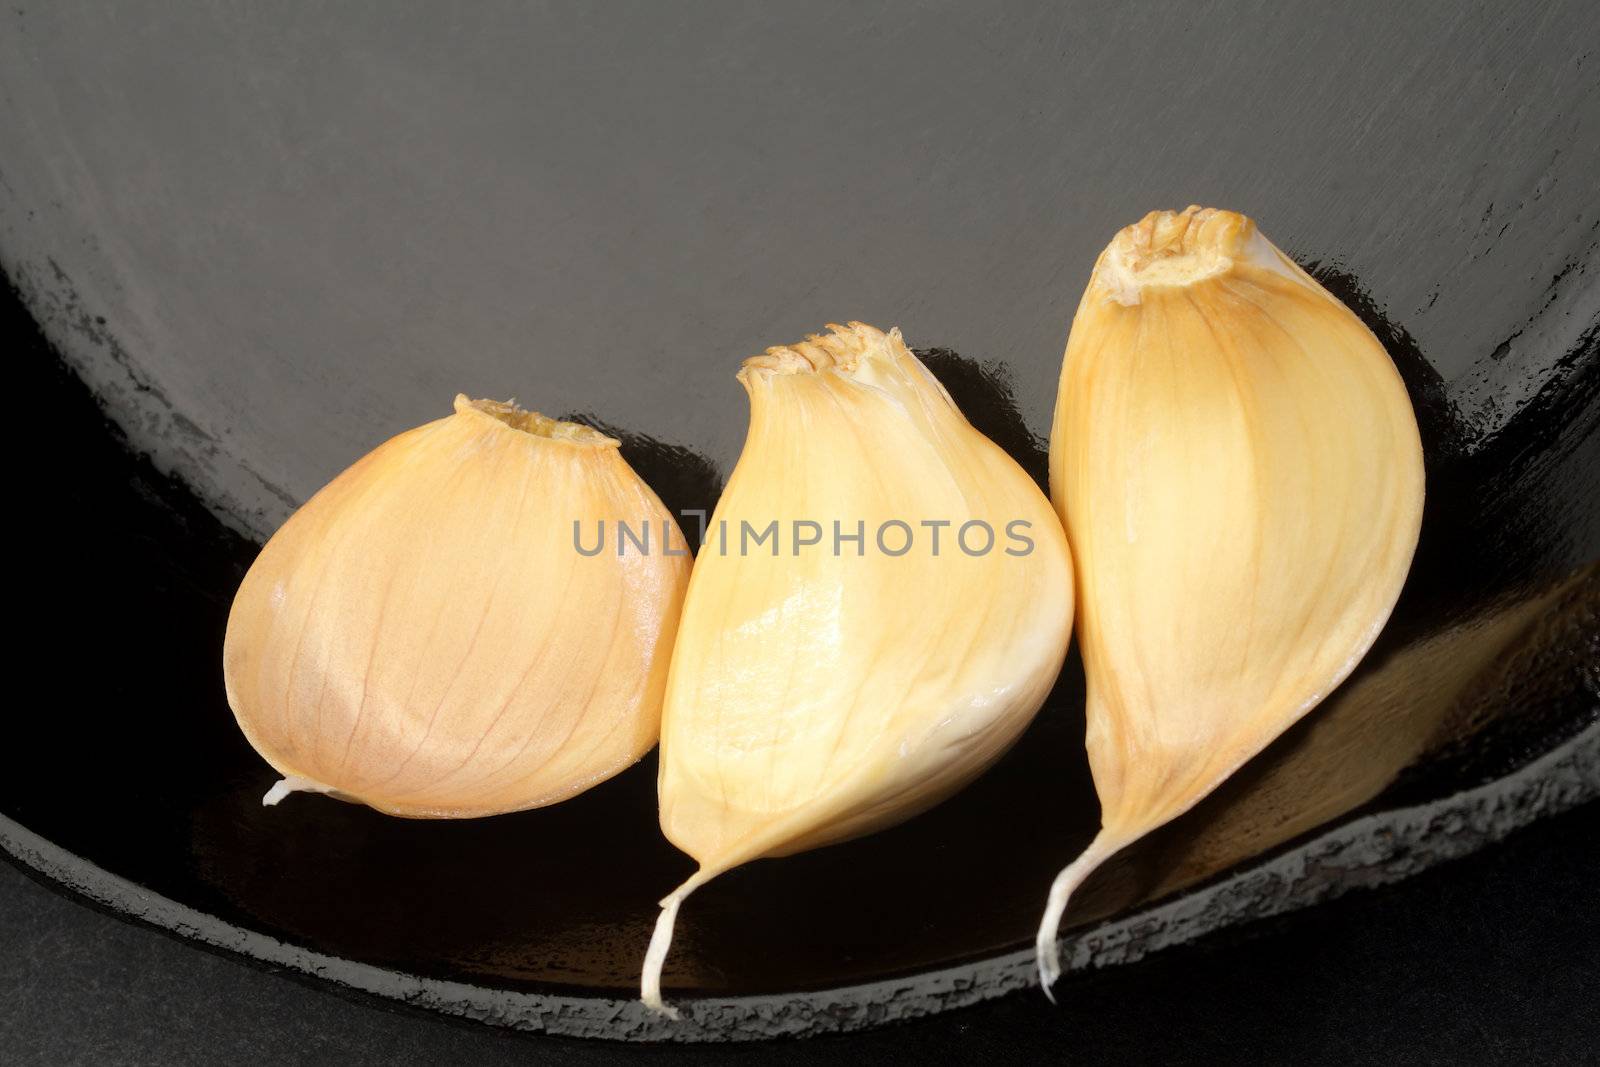  Three cloves of garlic by carterphoto